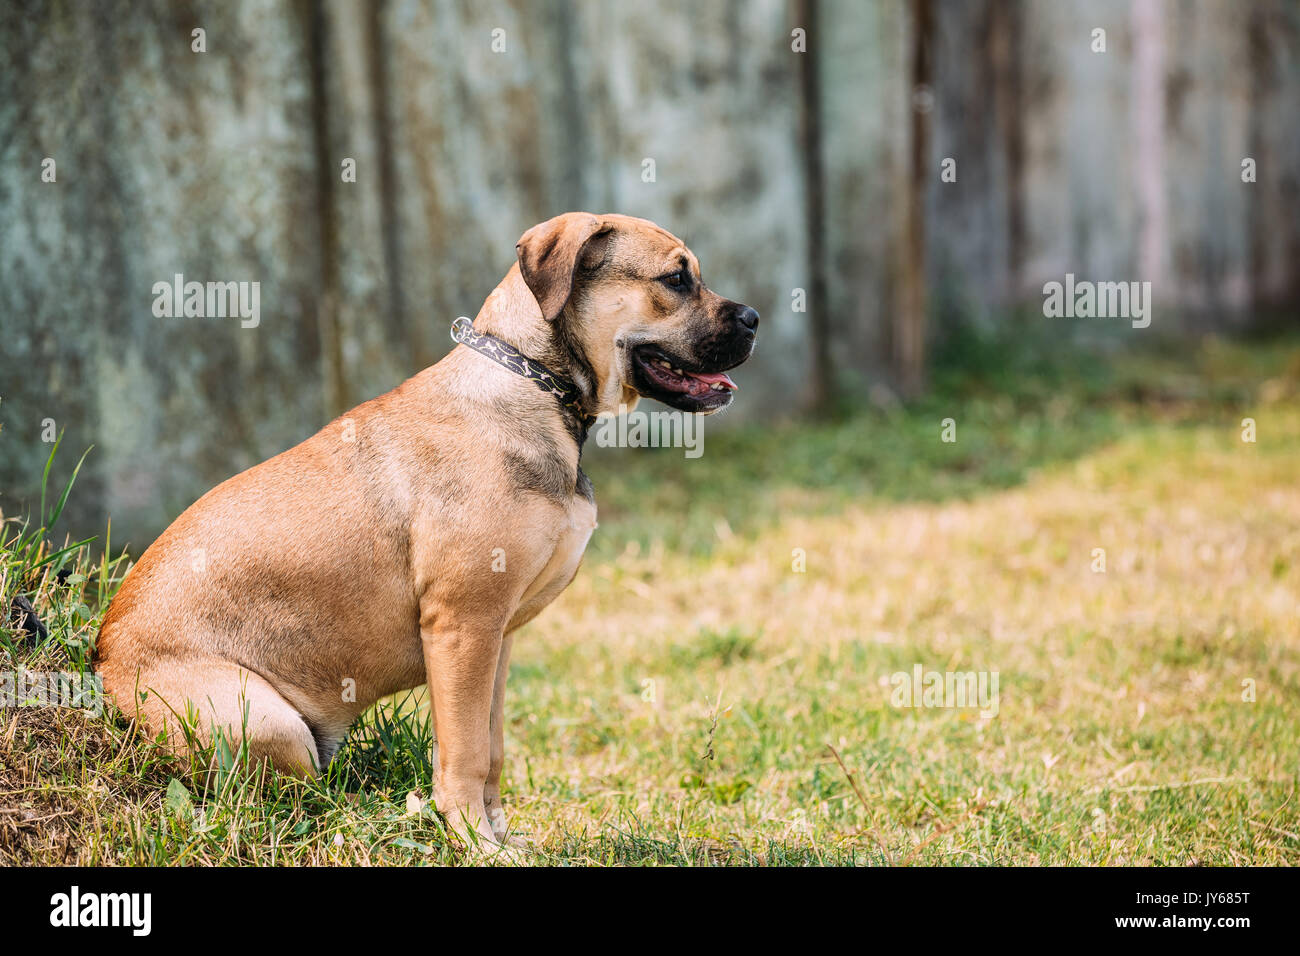 Ca De Bou Or Perro De Presa Mallorquin Puppy Sit Outdoor On Green Grass. Typical Molossian Dog Stock Photo